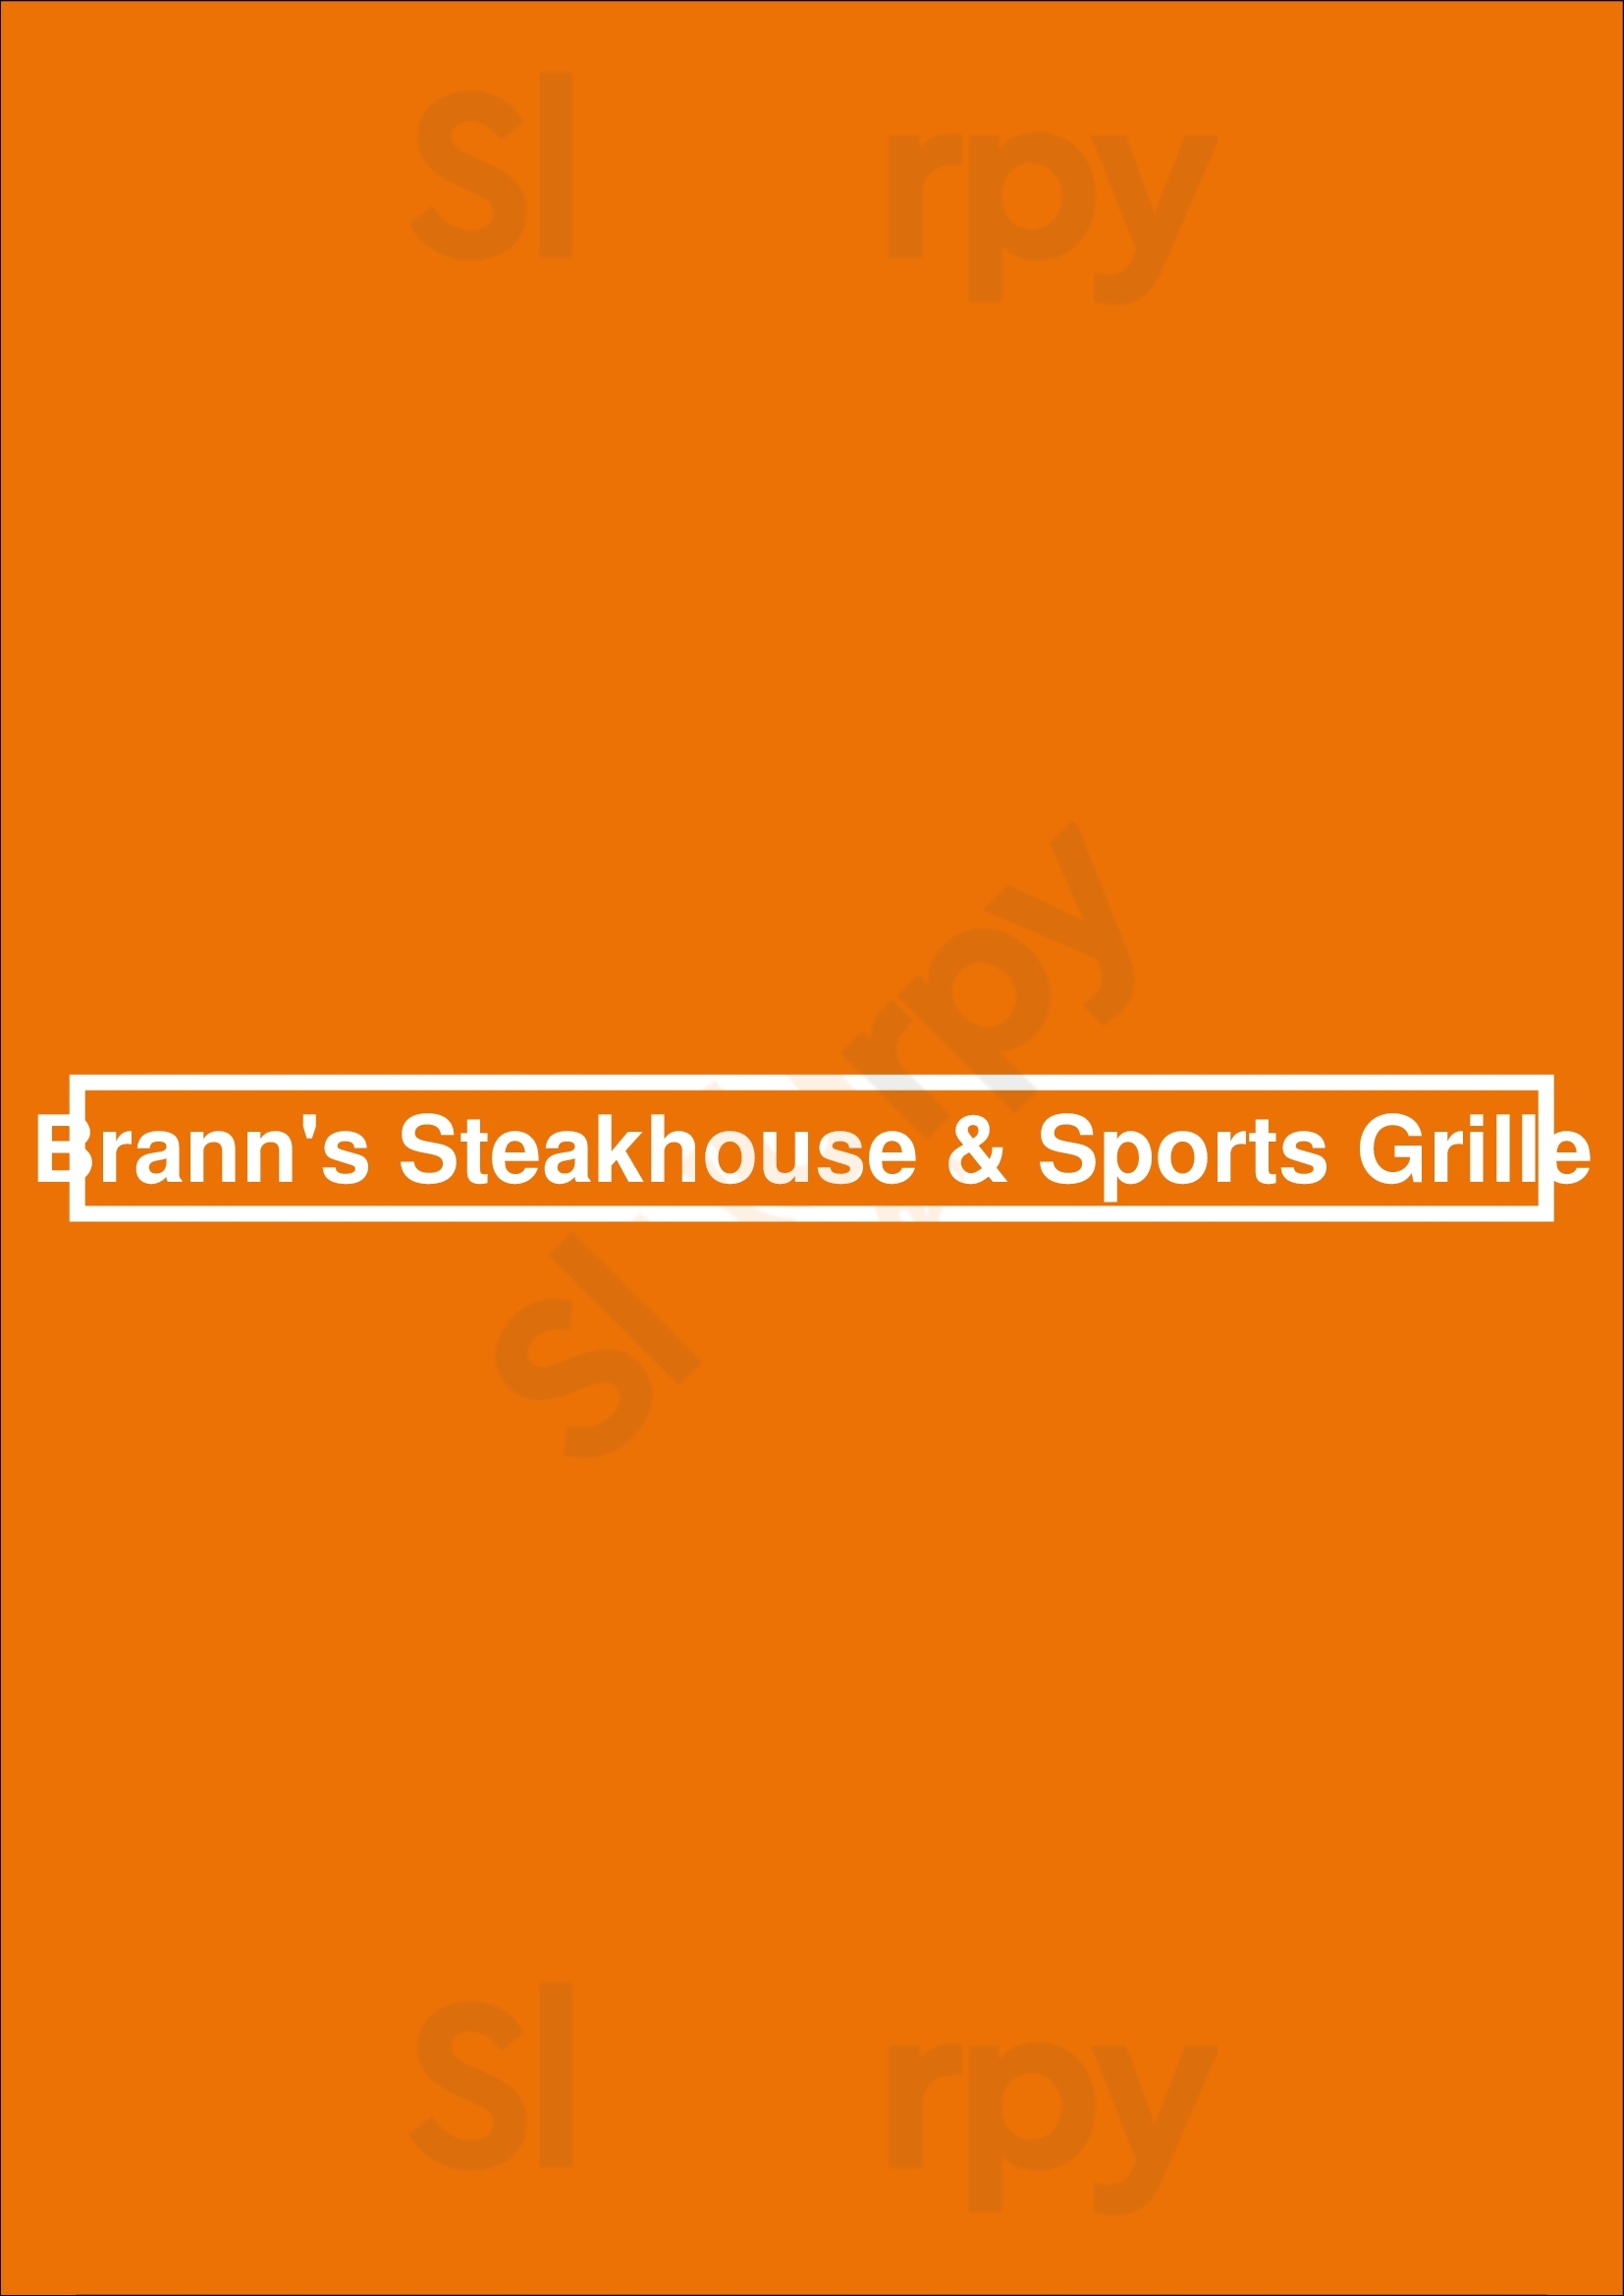 Brann's Steakhouse & Sports Grille Portage Menu - 1